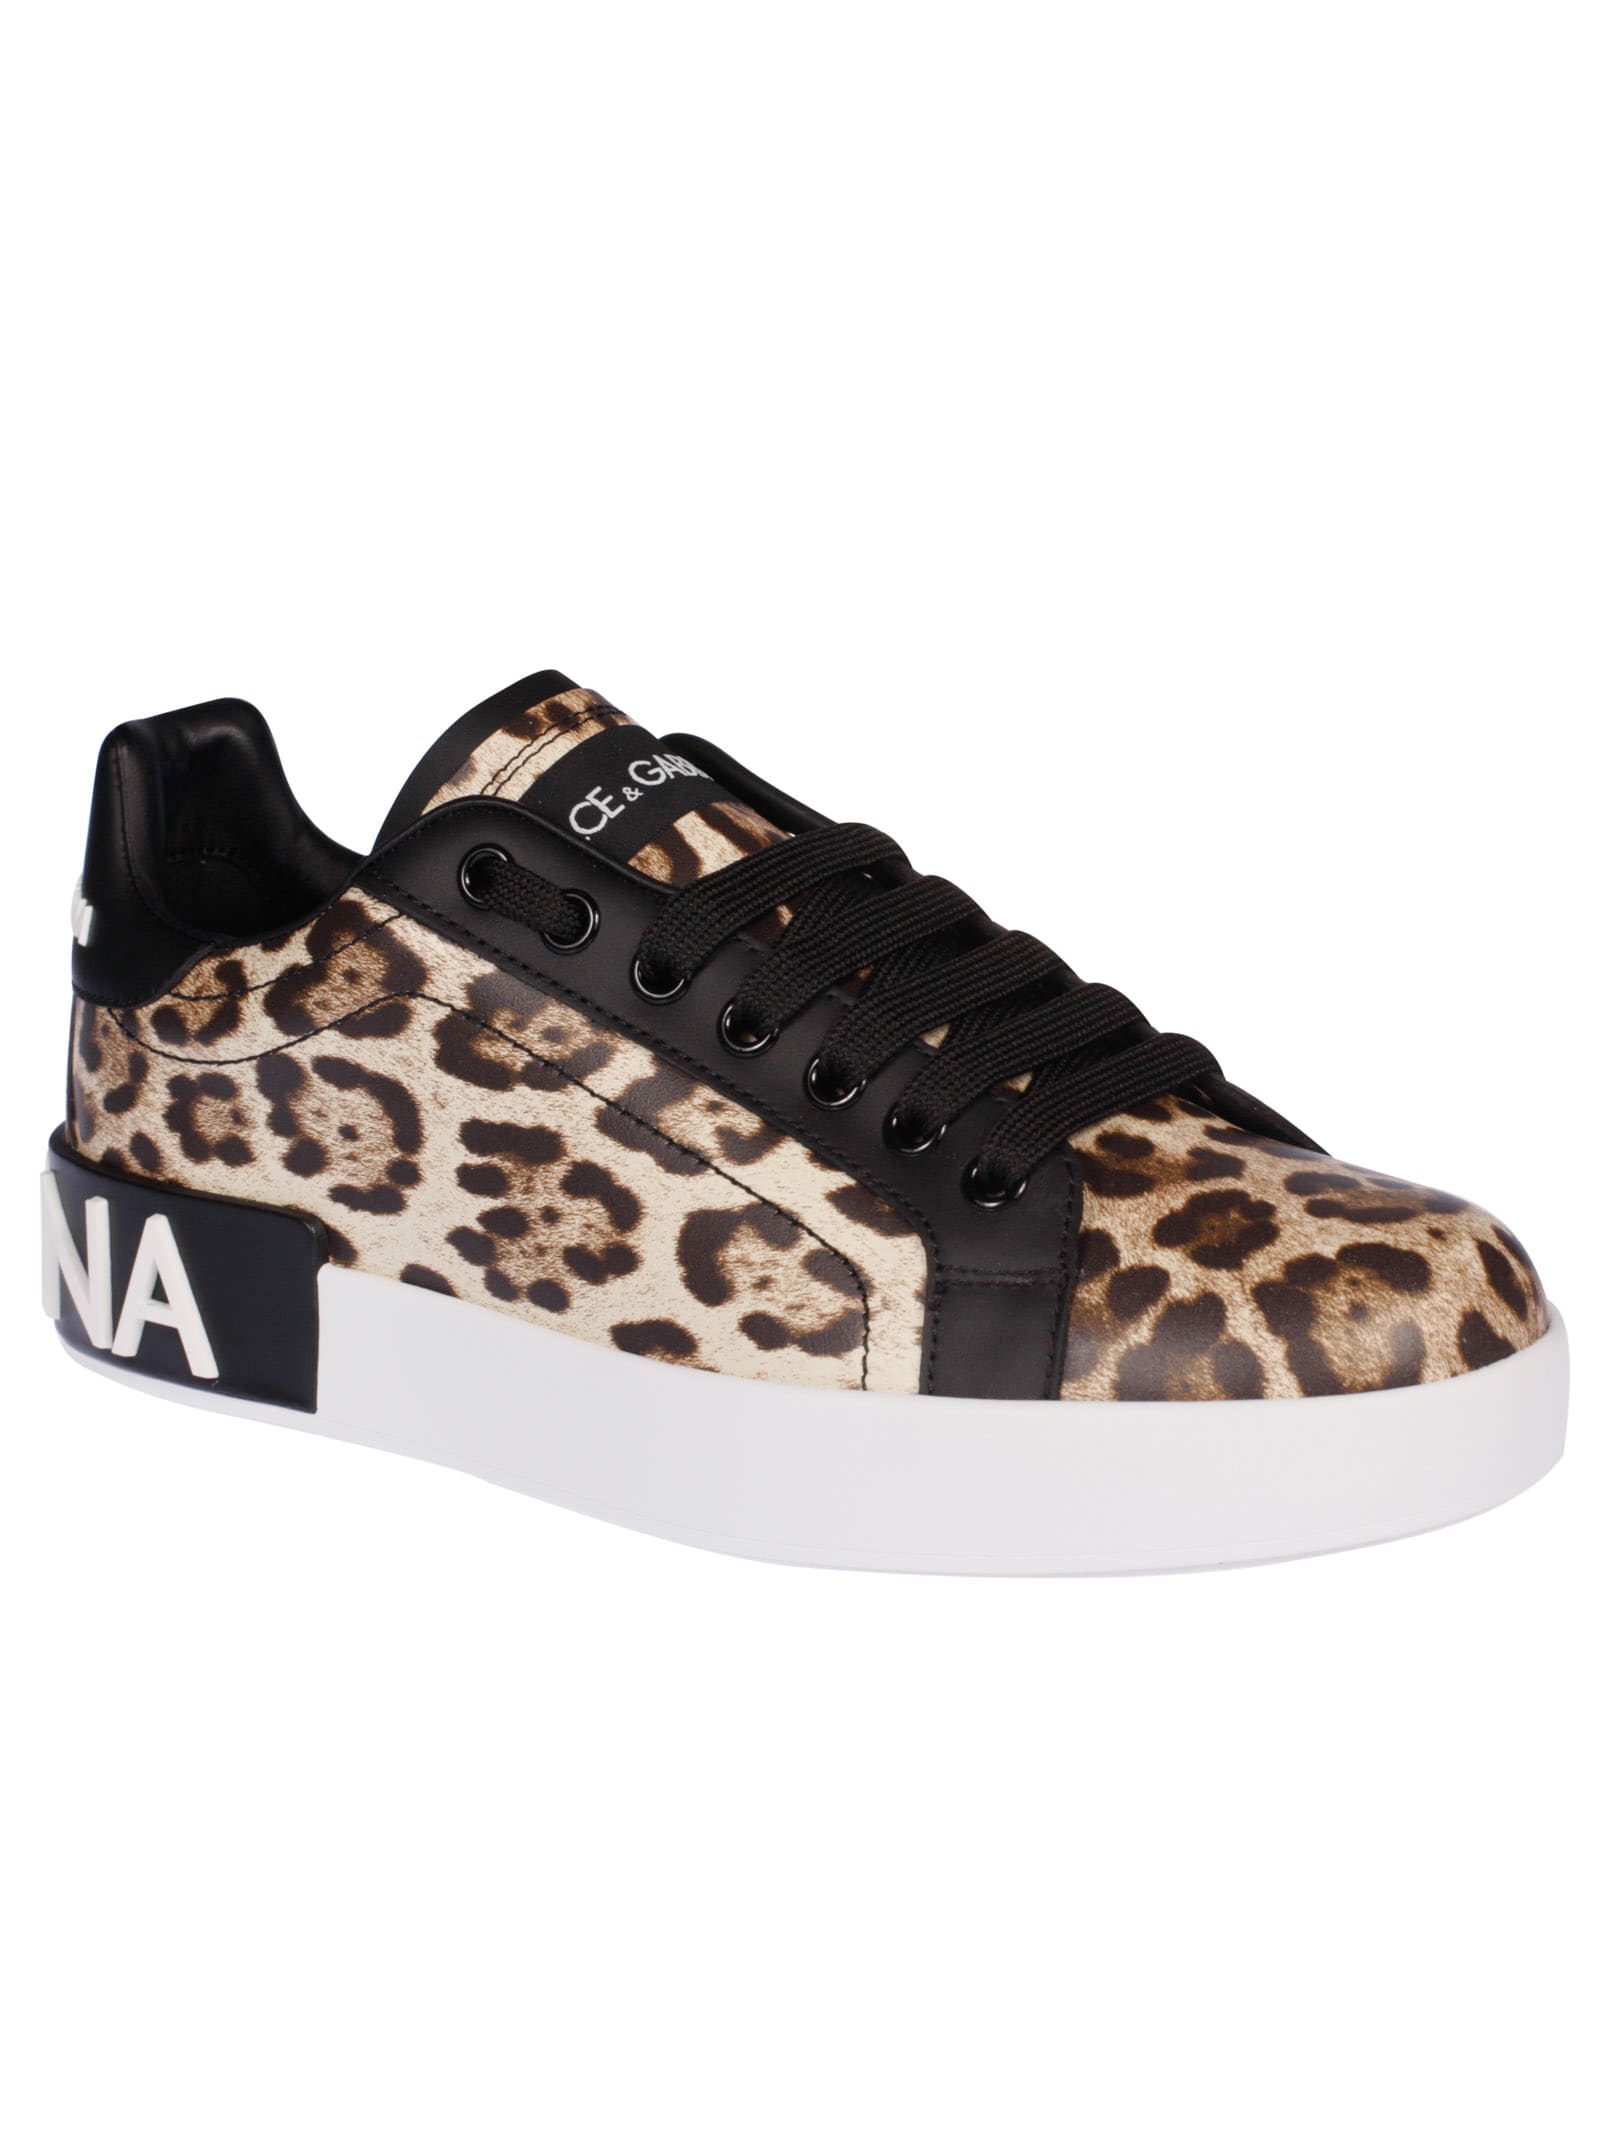 dolce gabbana shoes leopard